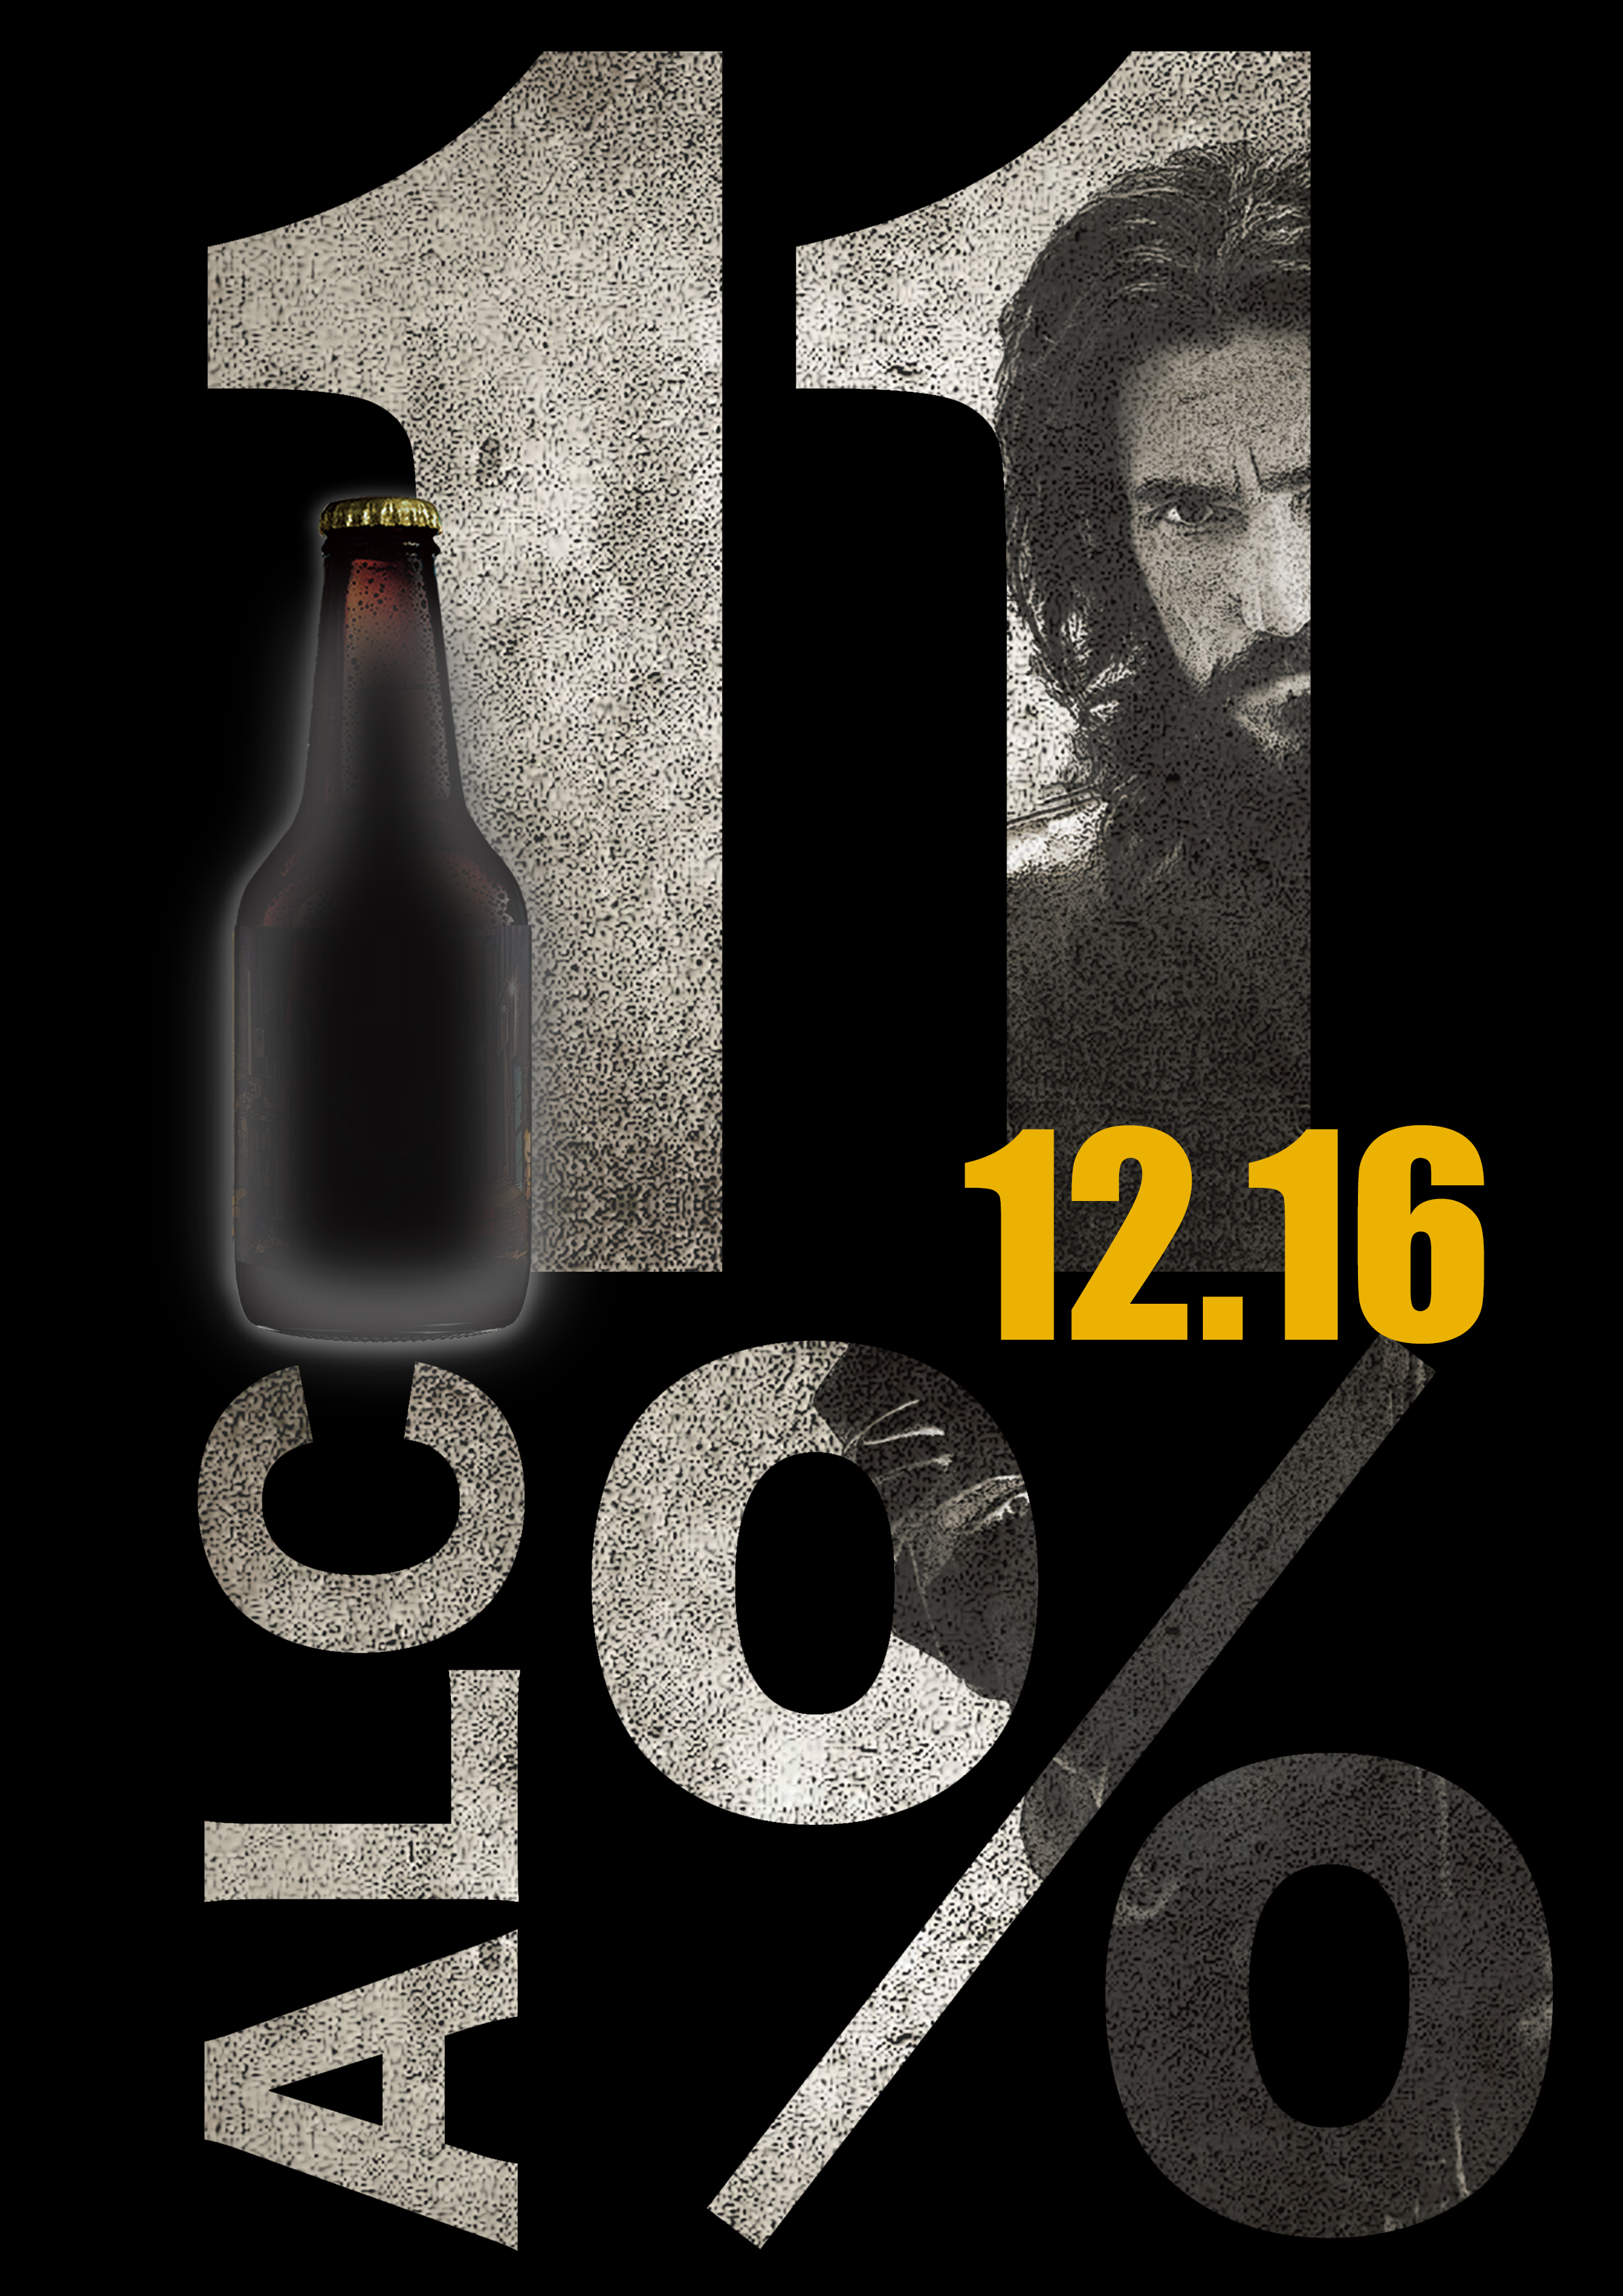 12.16 ALC11%ビール発売